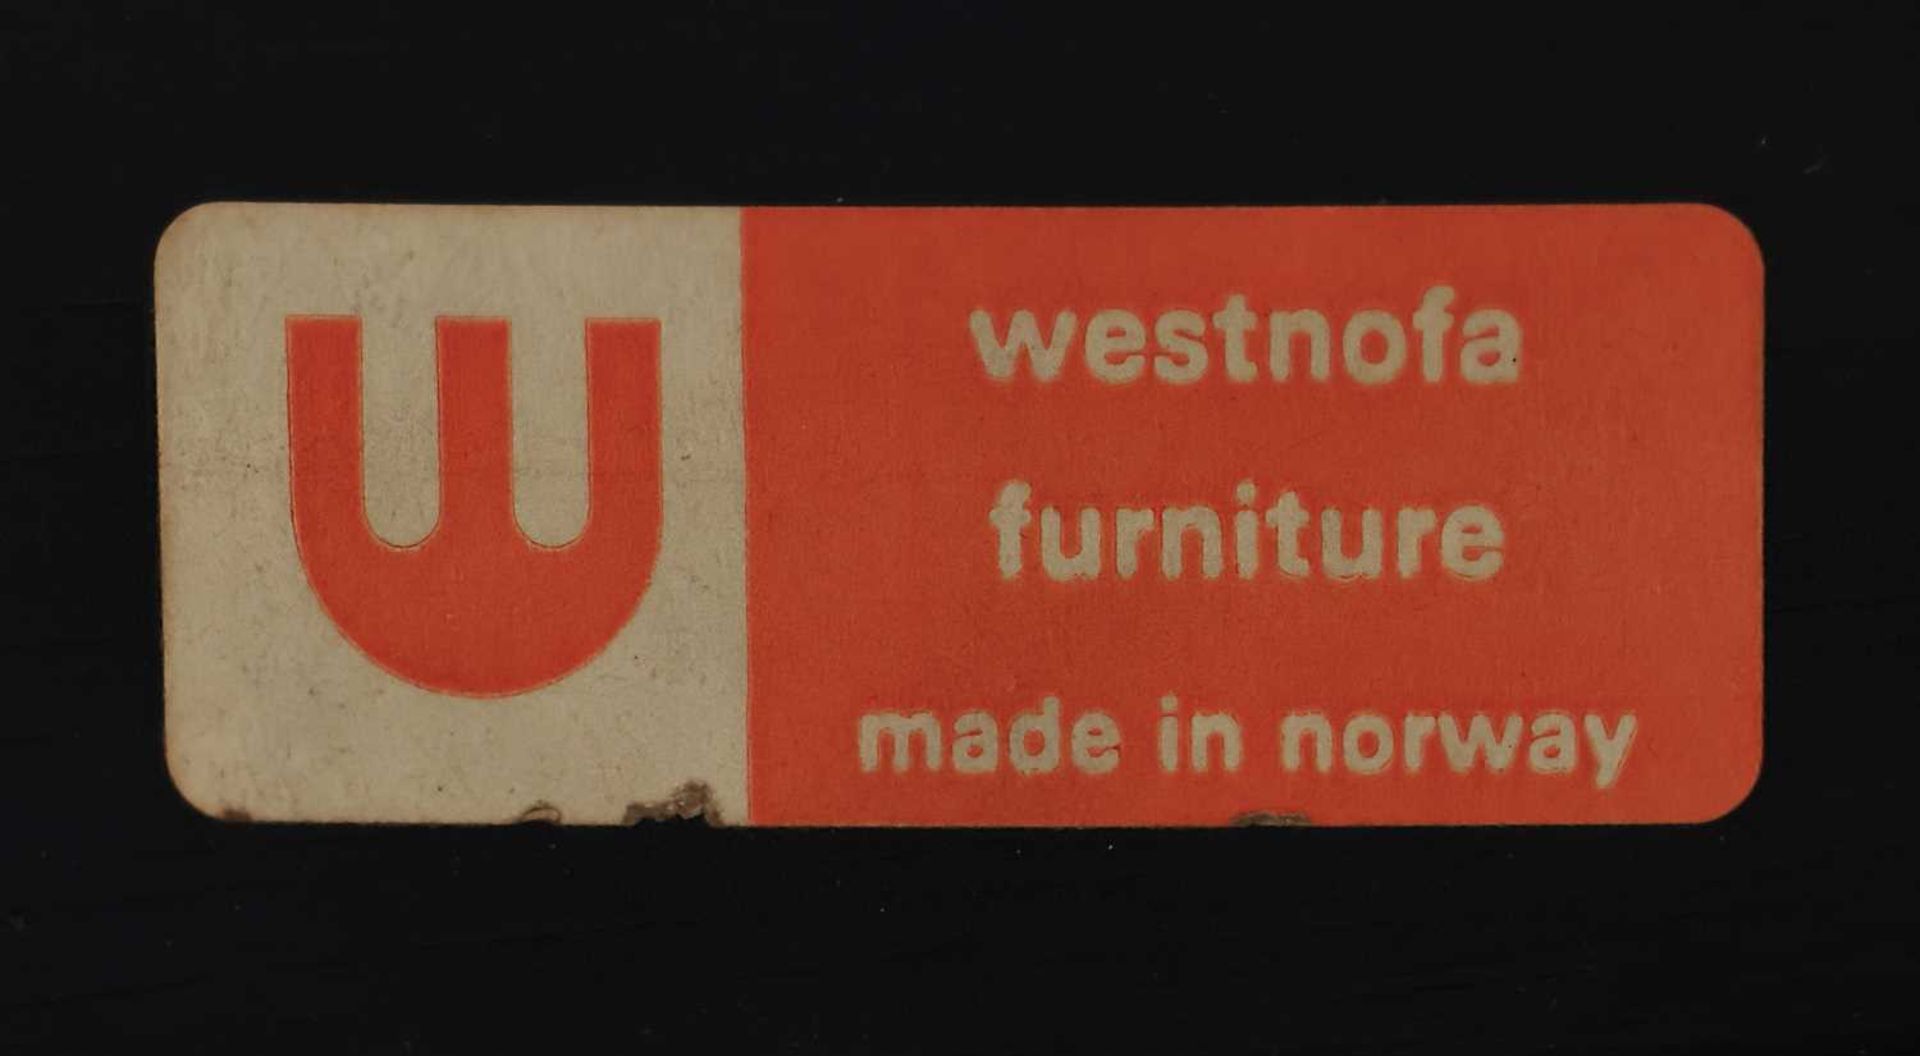 2 WESTNOFA (Norwegen) "Siesta" Lounge Sessel - Image 3 of 4